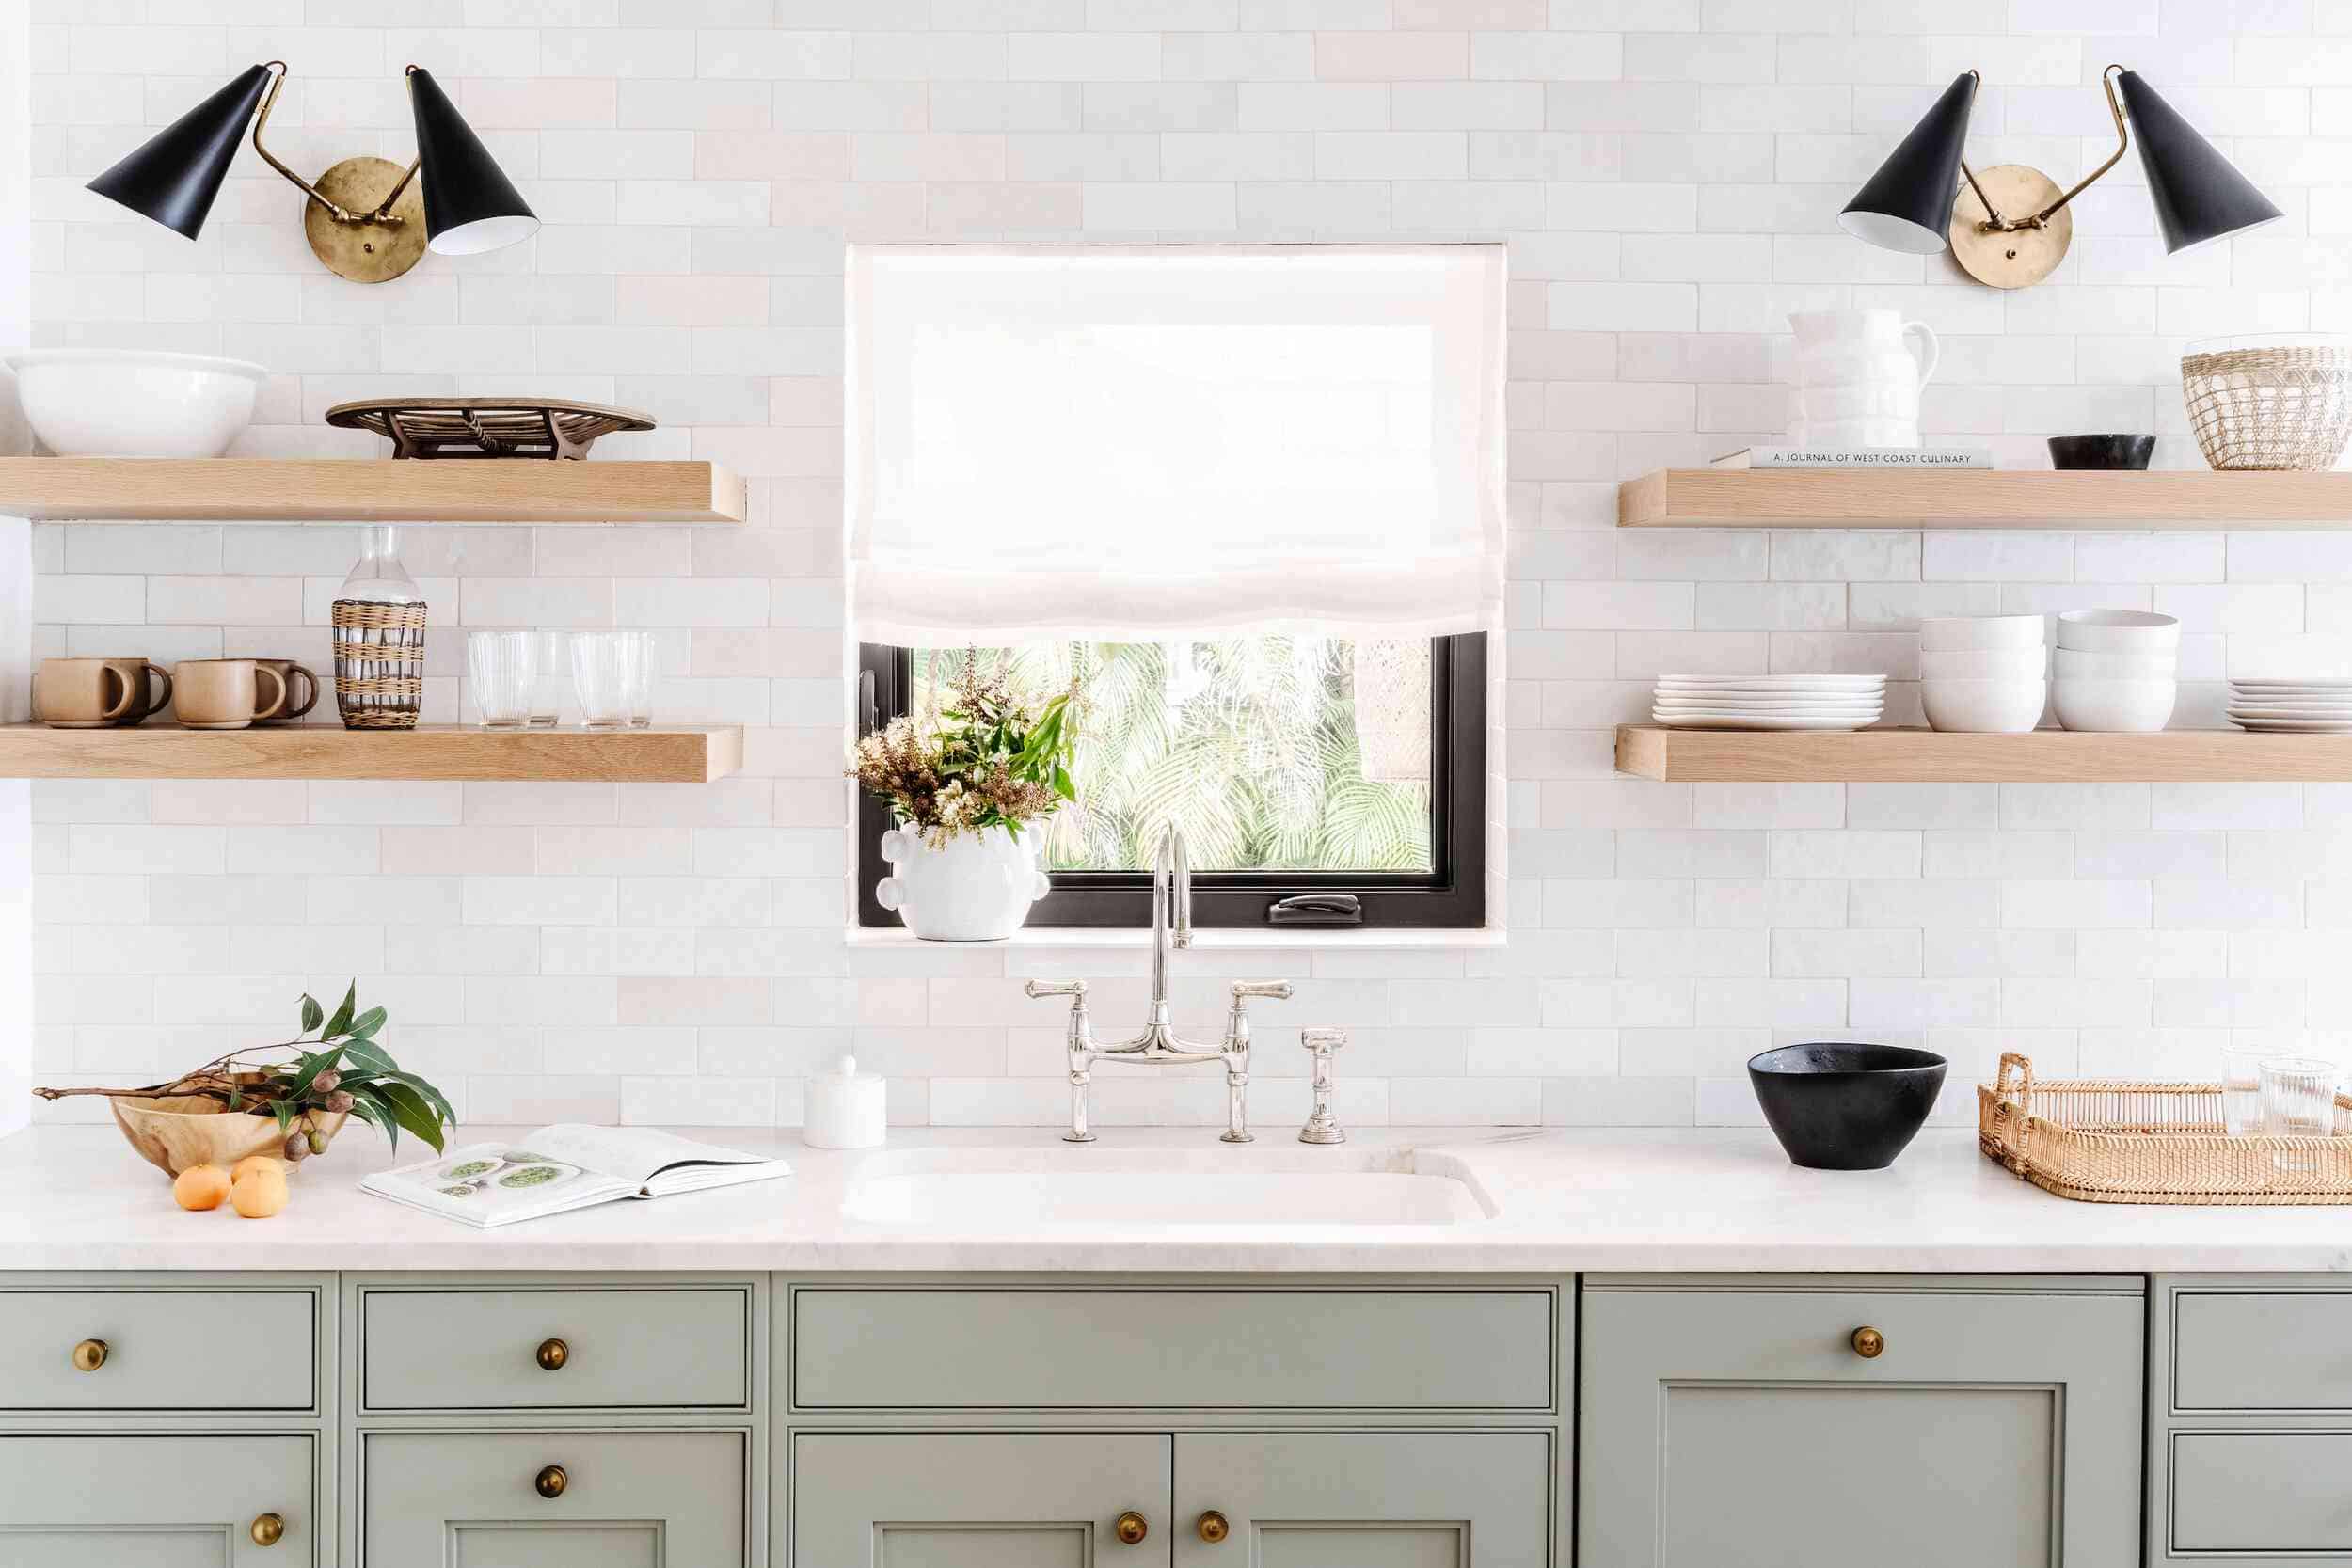 Modern white kitchen design with display shelves